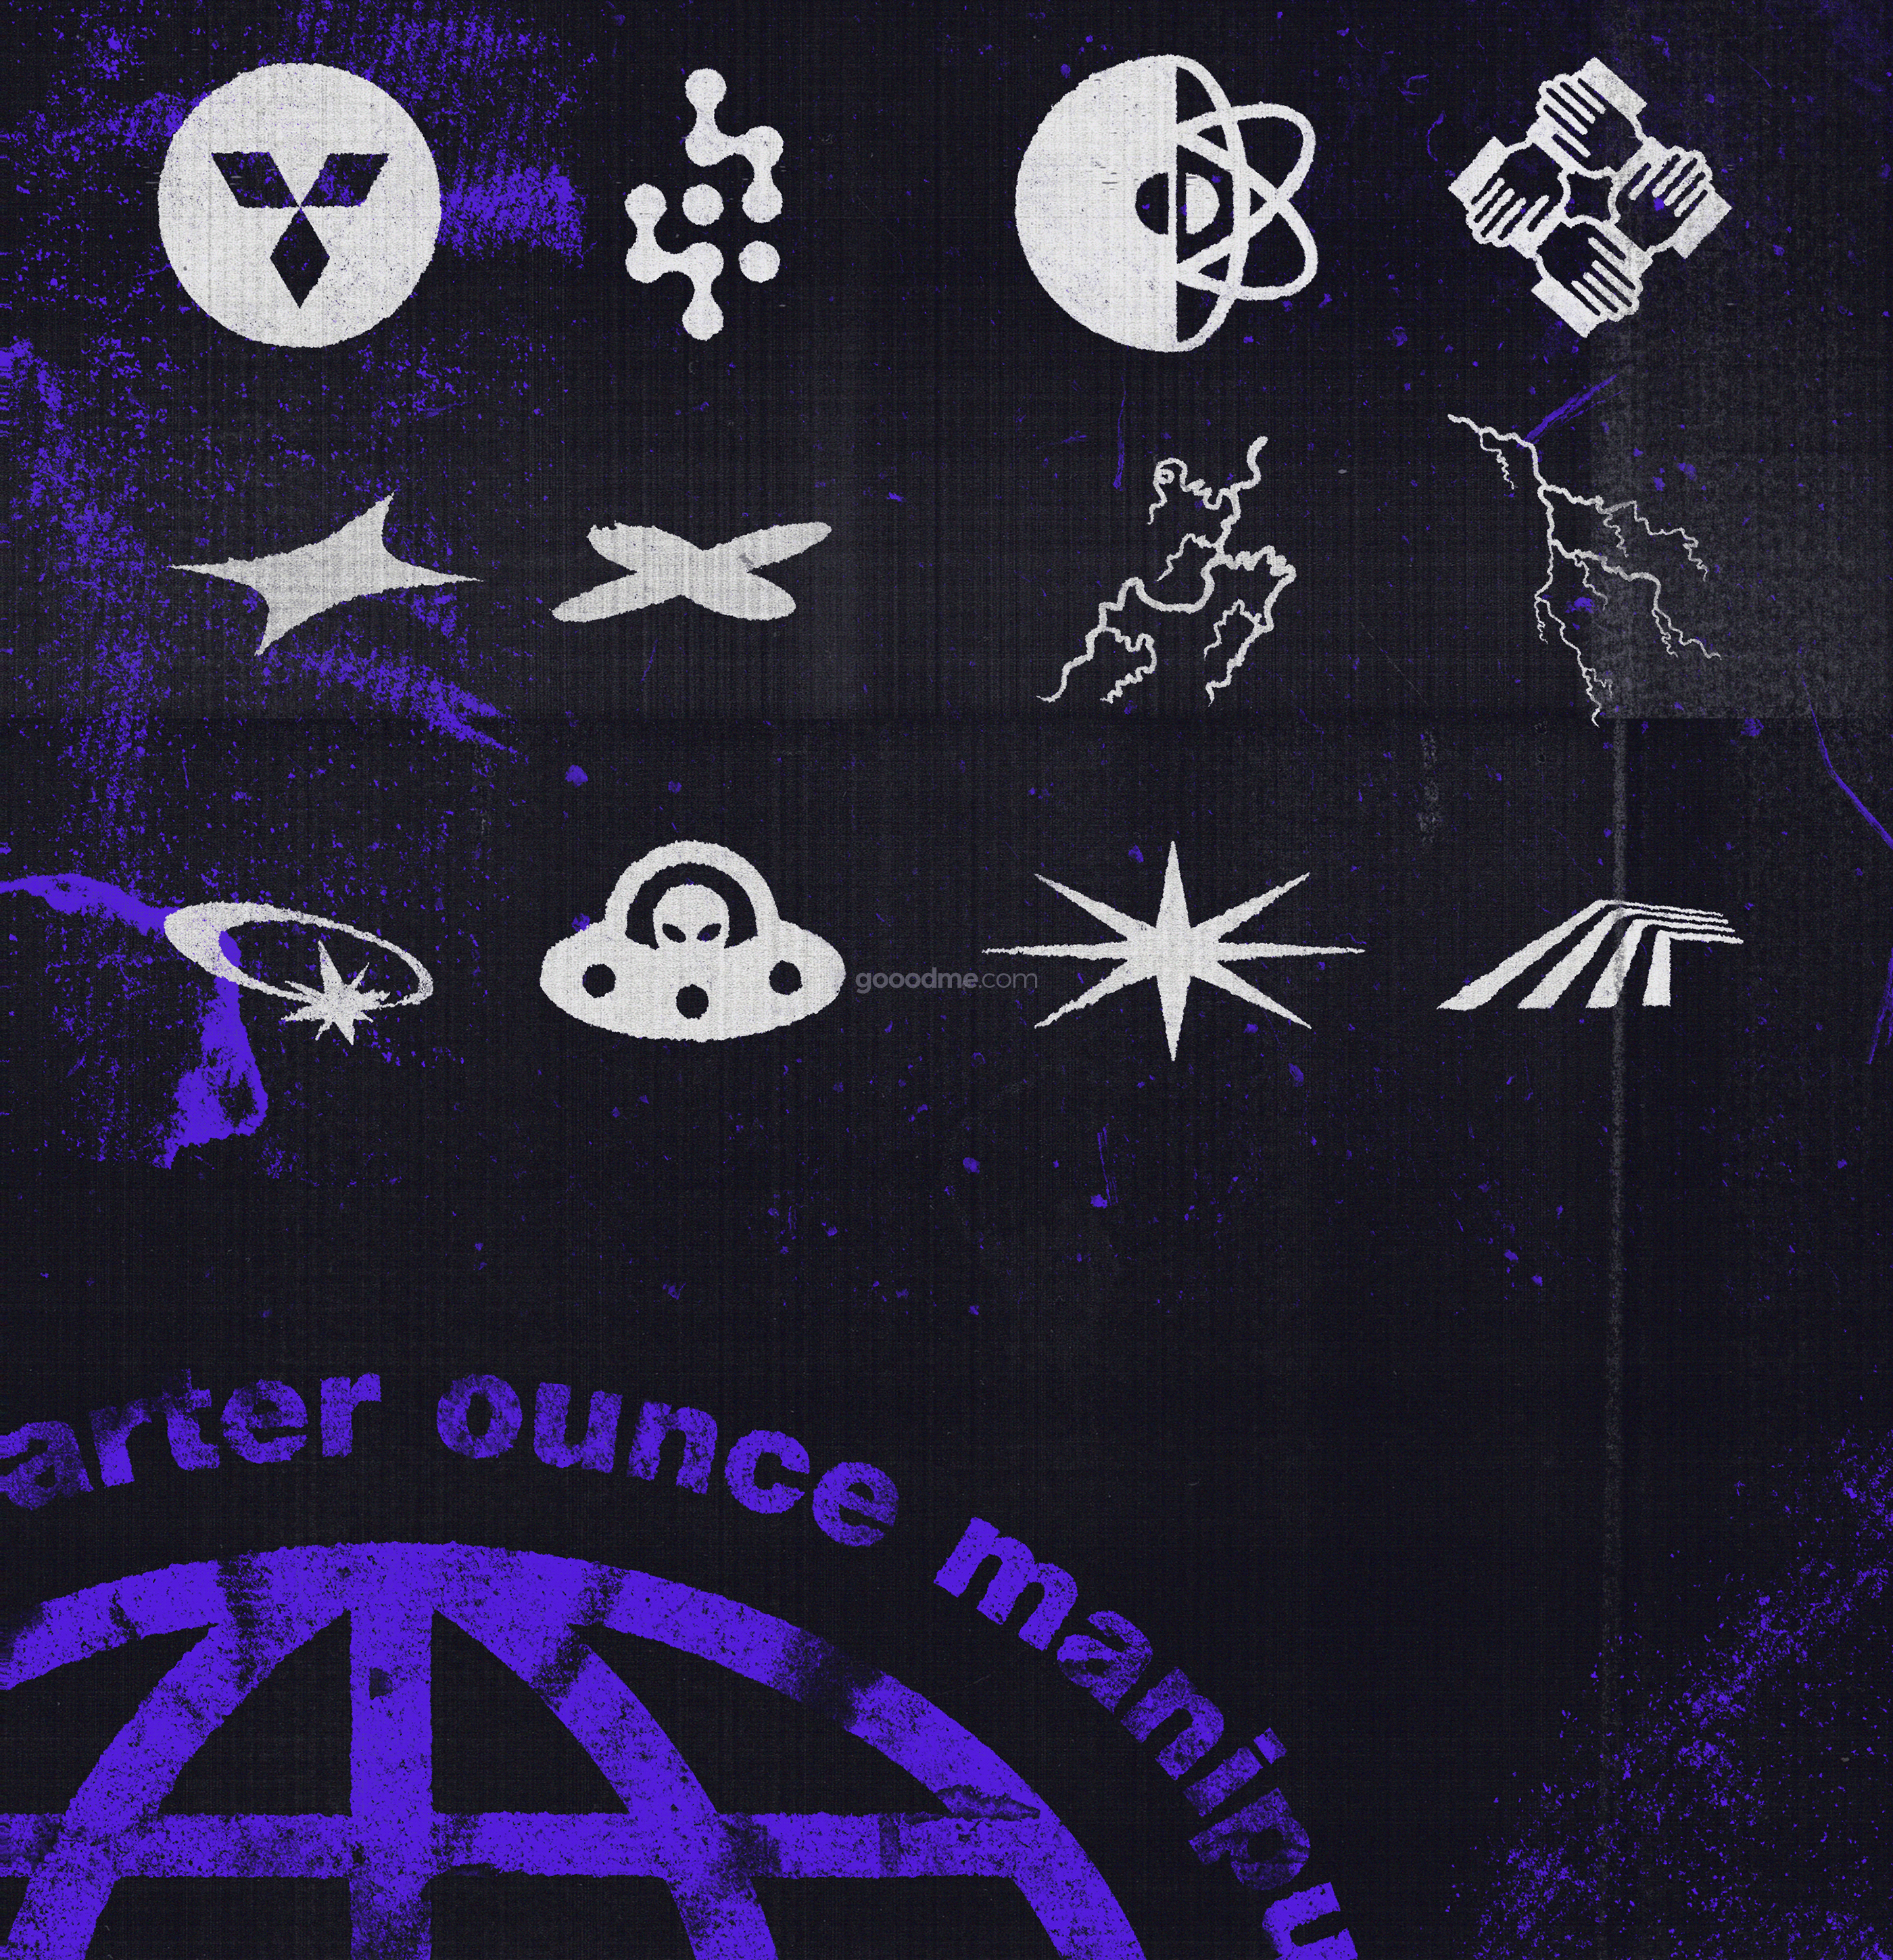 潮流嘻哈复古噪点划痕做旧酸性图标标志PS设计套件34 Grunge Icons and Marks pack